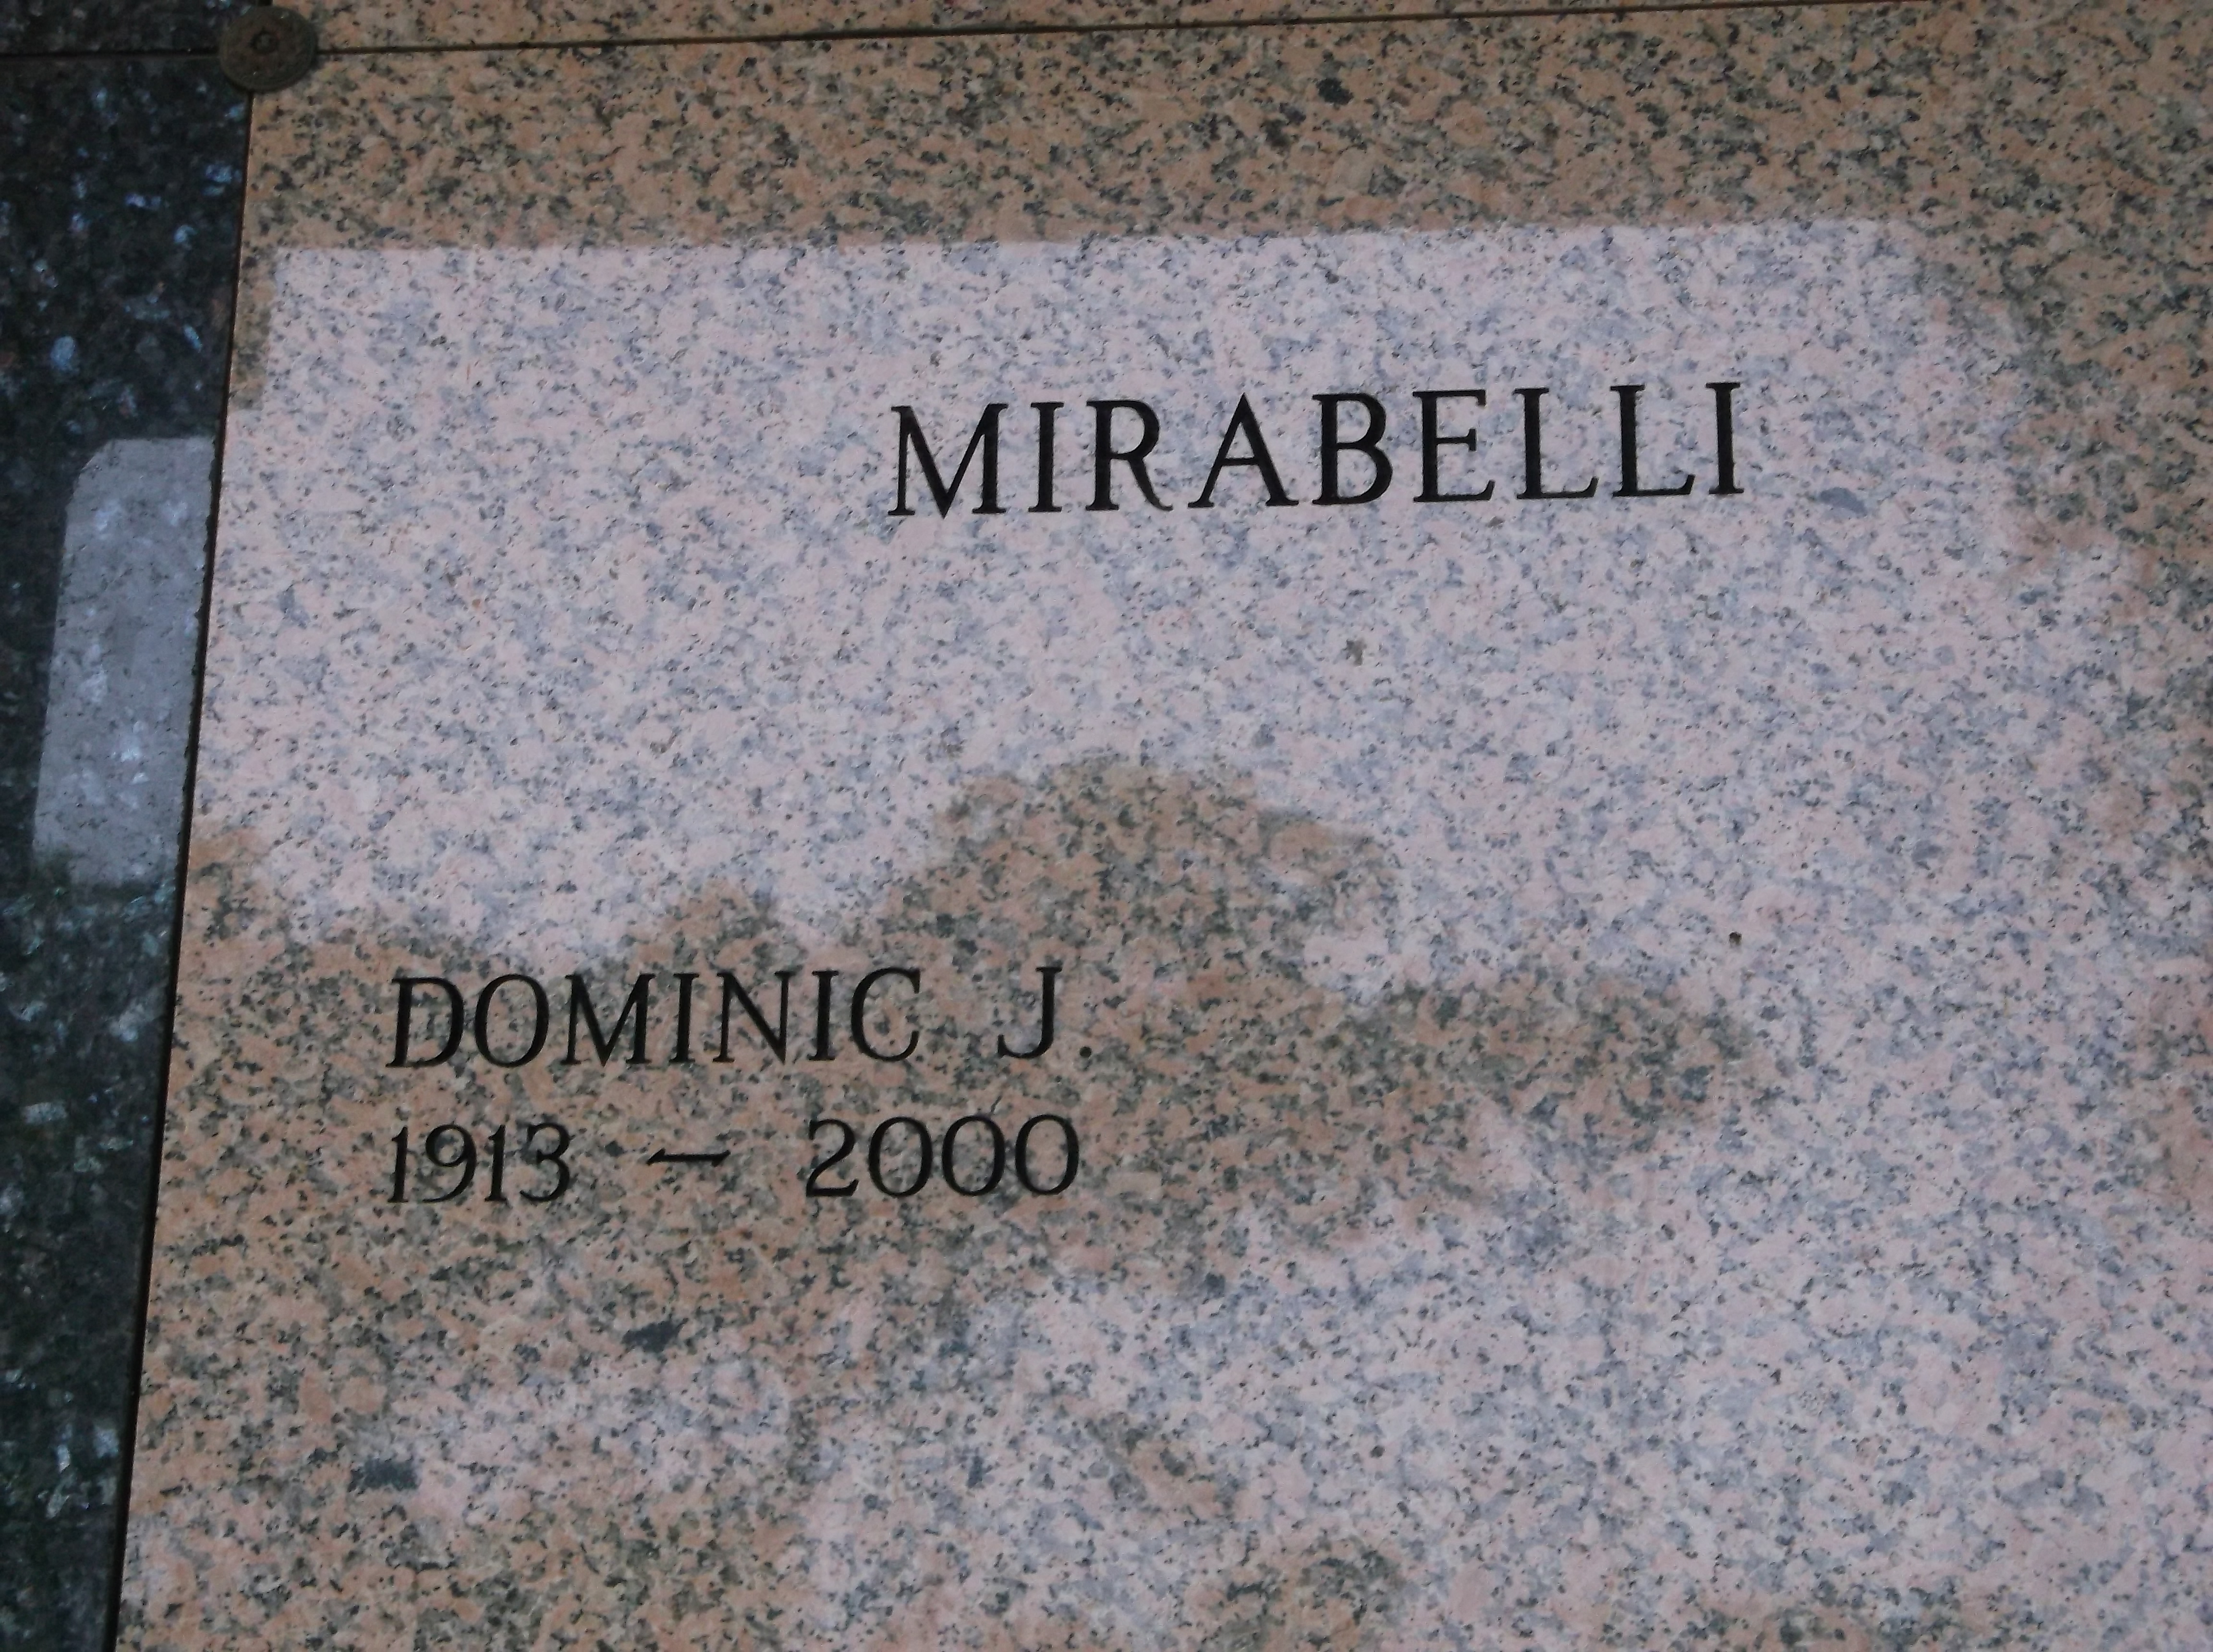 Dominic J Mirabelli